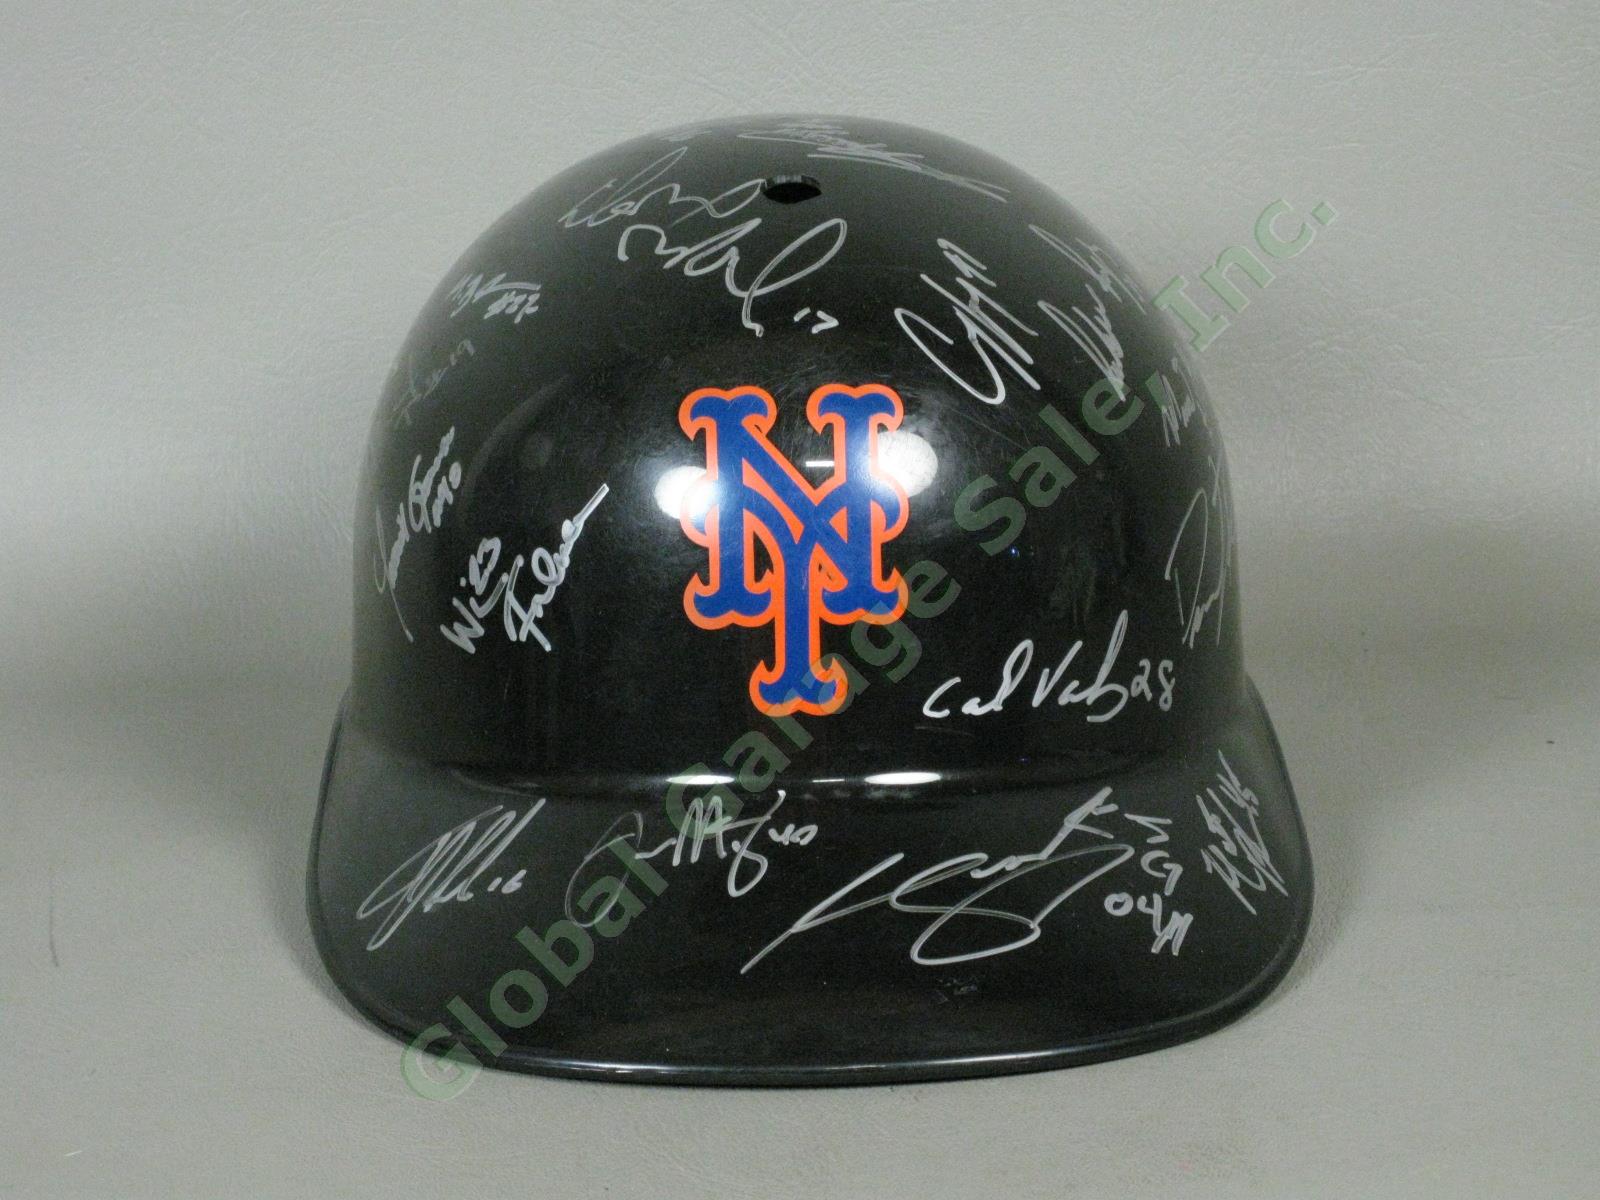 2015 Brooklyn Cyclones Team Signed Baseball Helmet MiLB MLB NYPL New York Mets